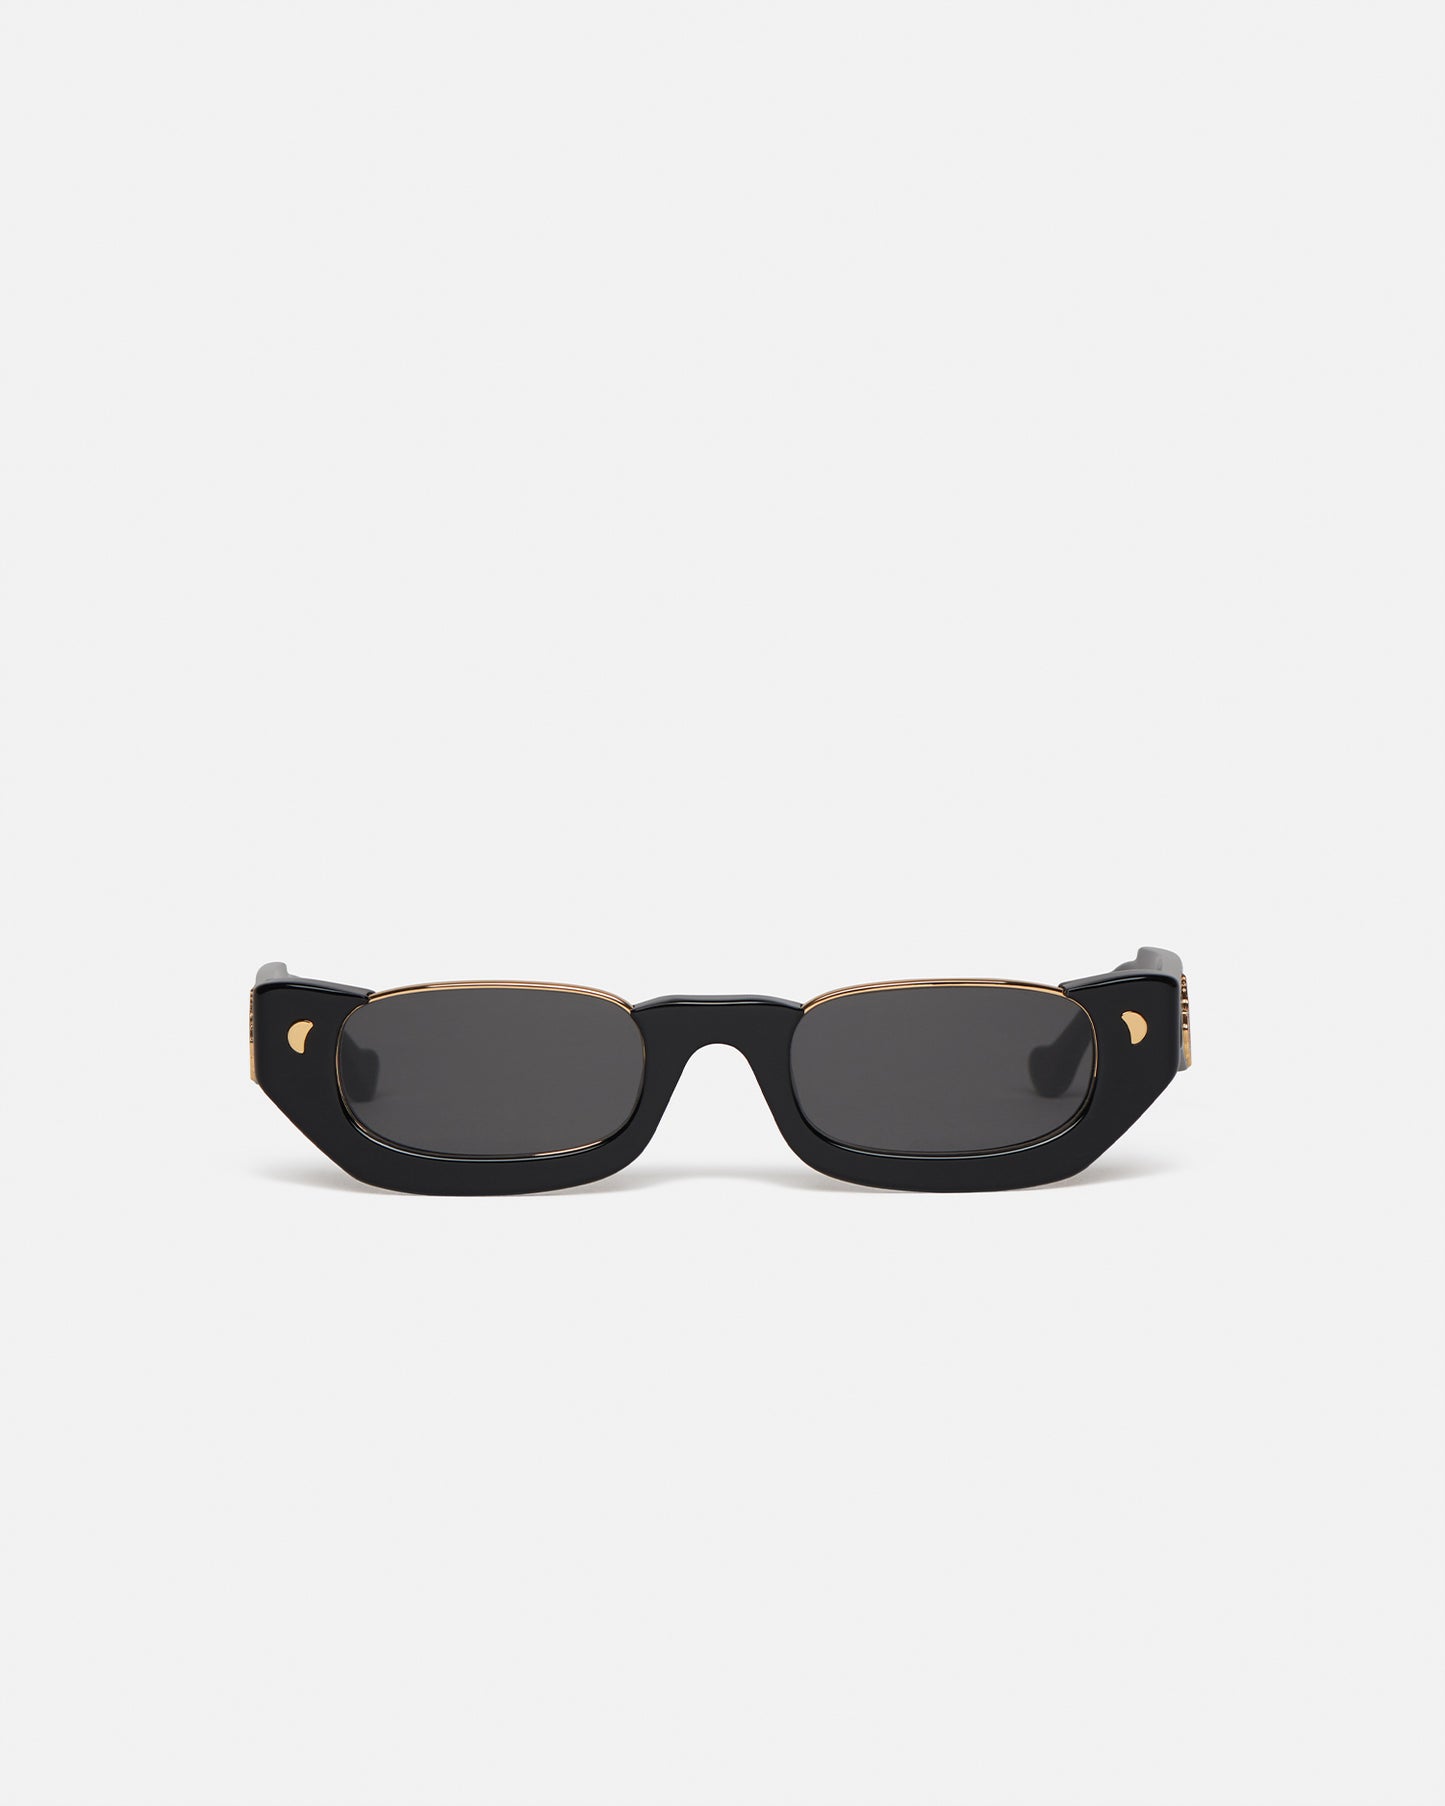 Zorea - Bio-Plastic Half-Moon Sunglasses - Black